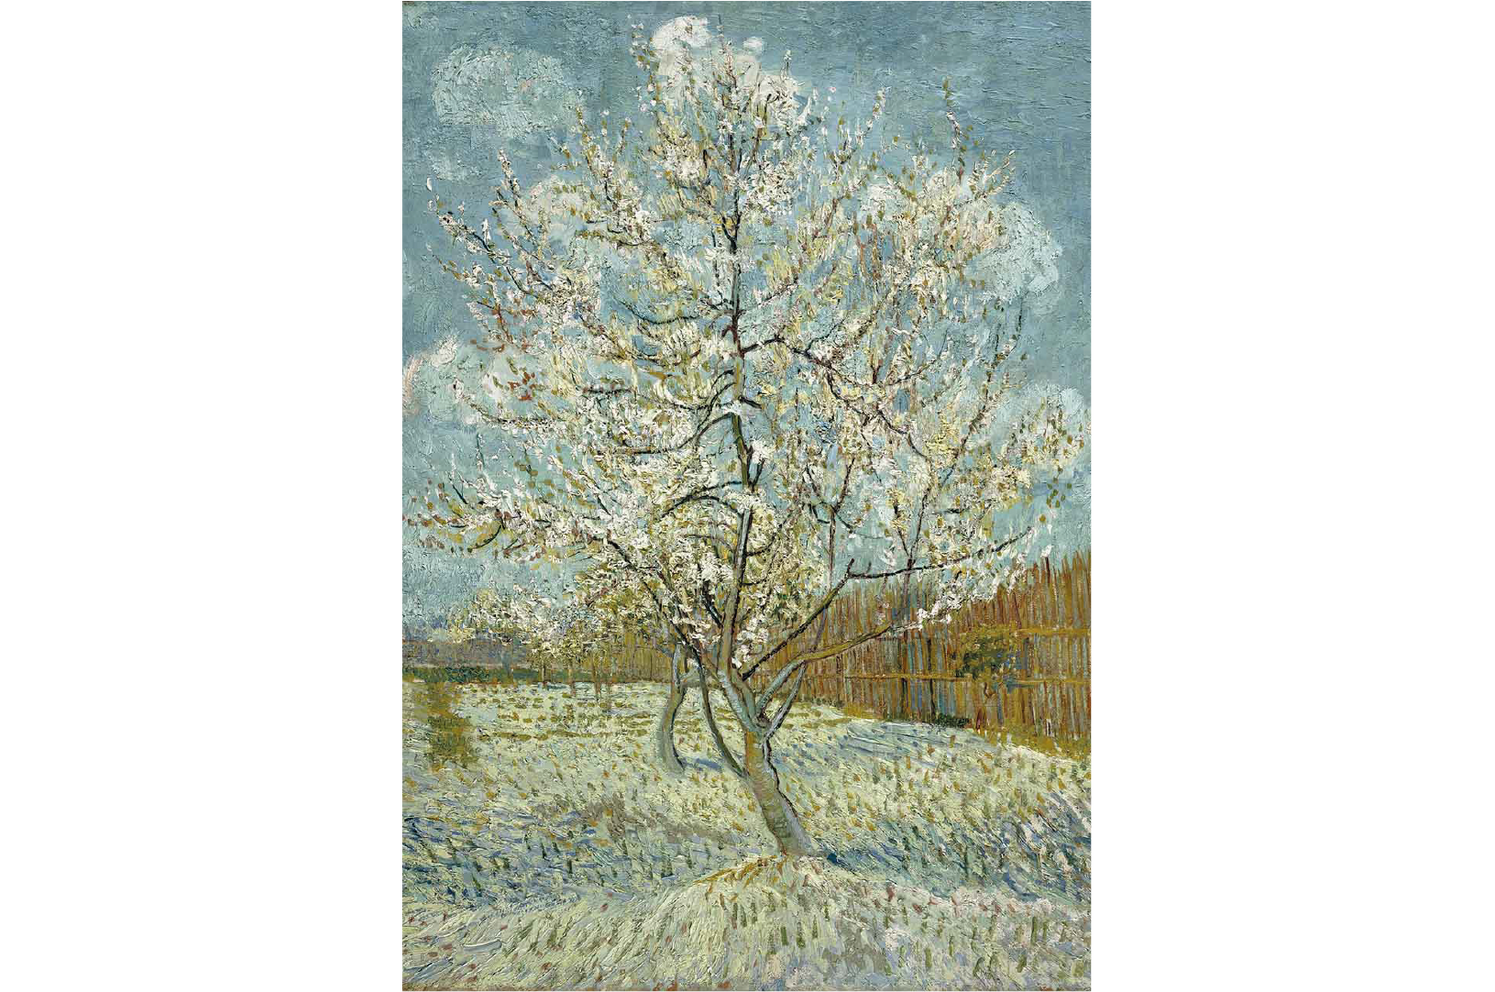 The Pink Peach Tree by Van Gogh